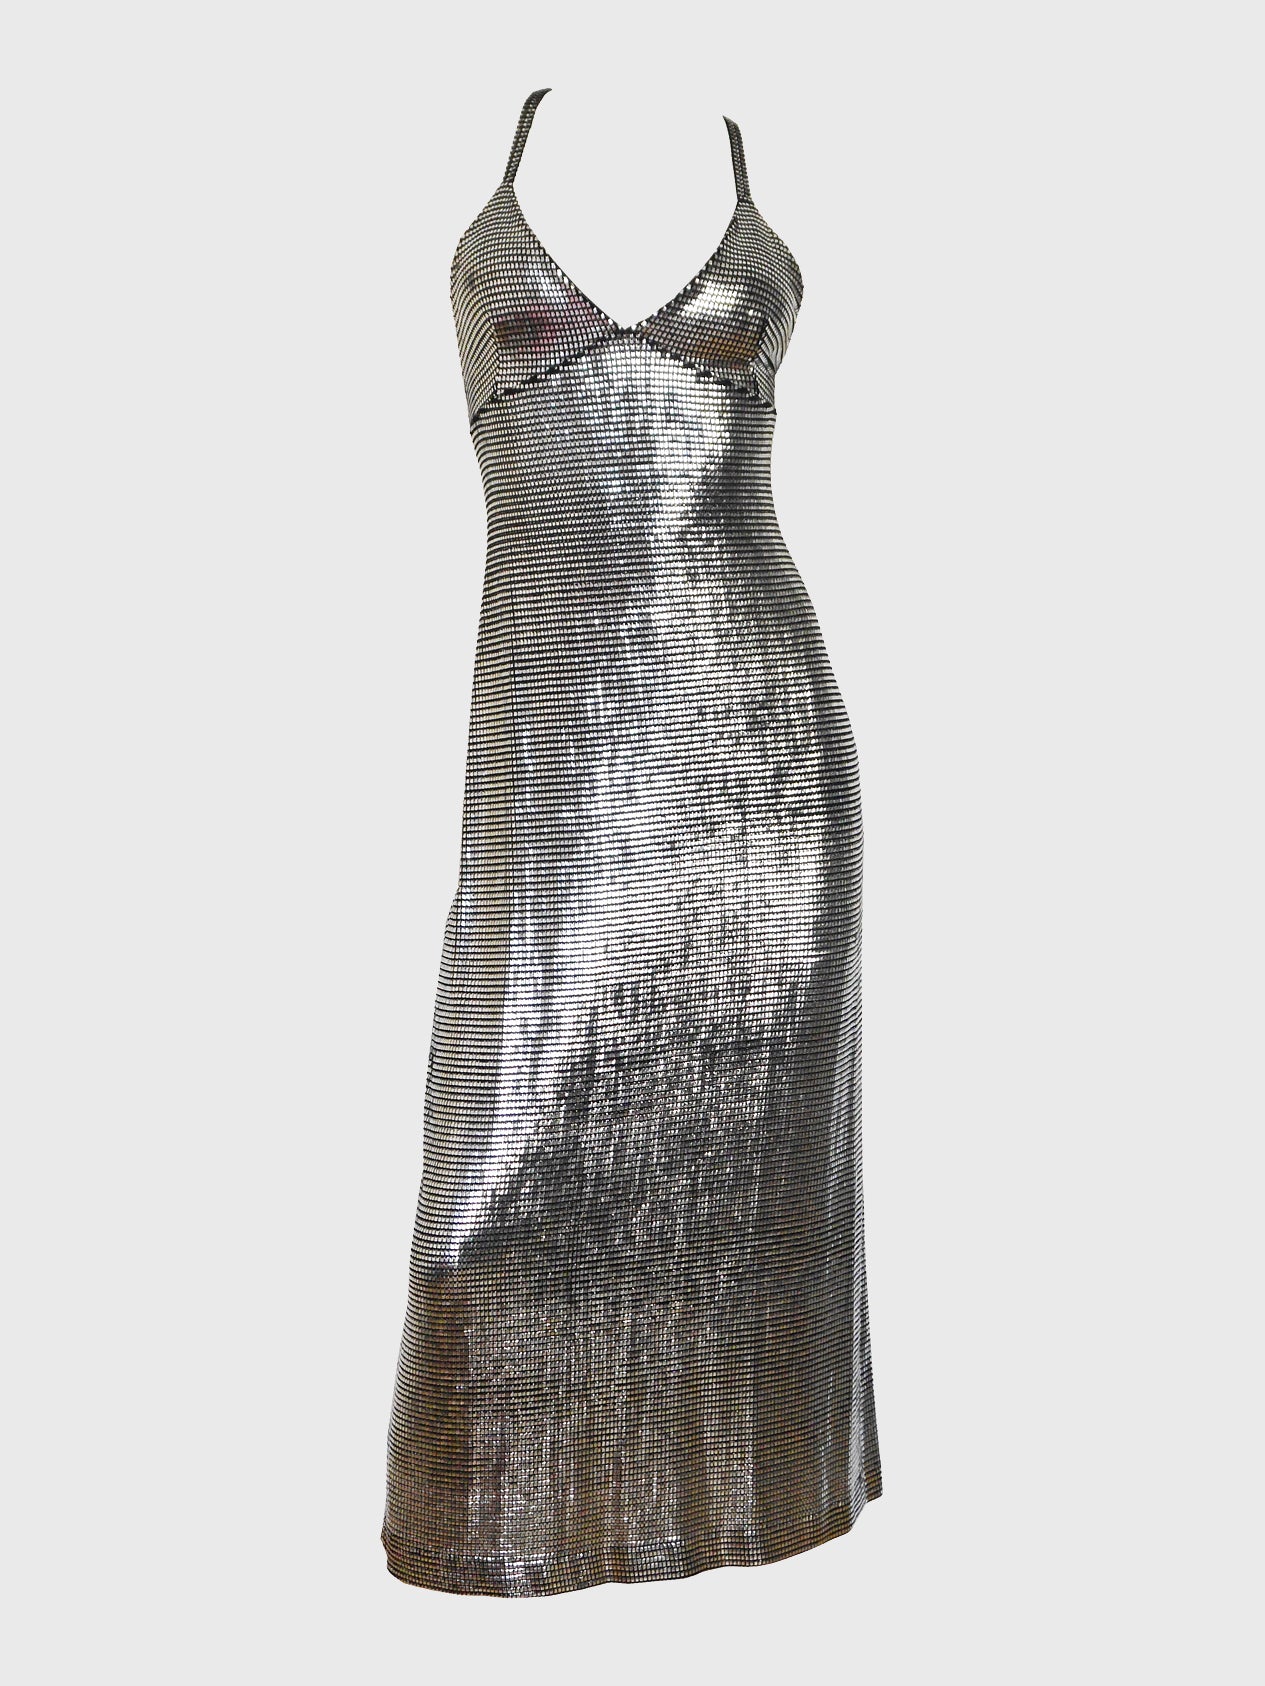 PACO RABANNE 1990s Vintage Liquid Silver Metallic Evening Dress